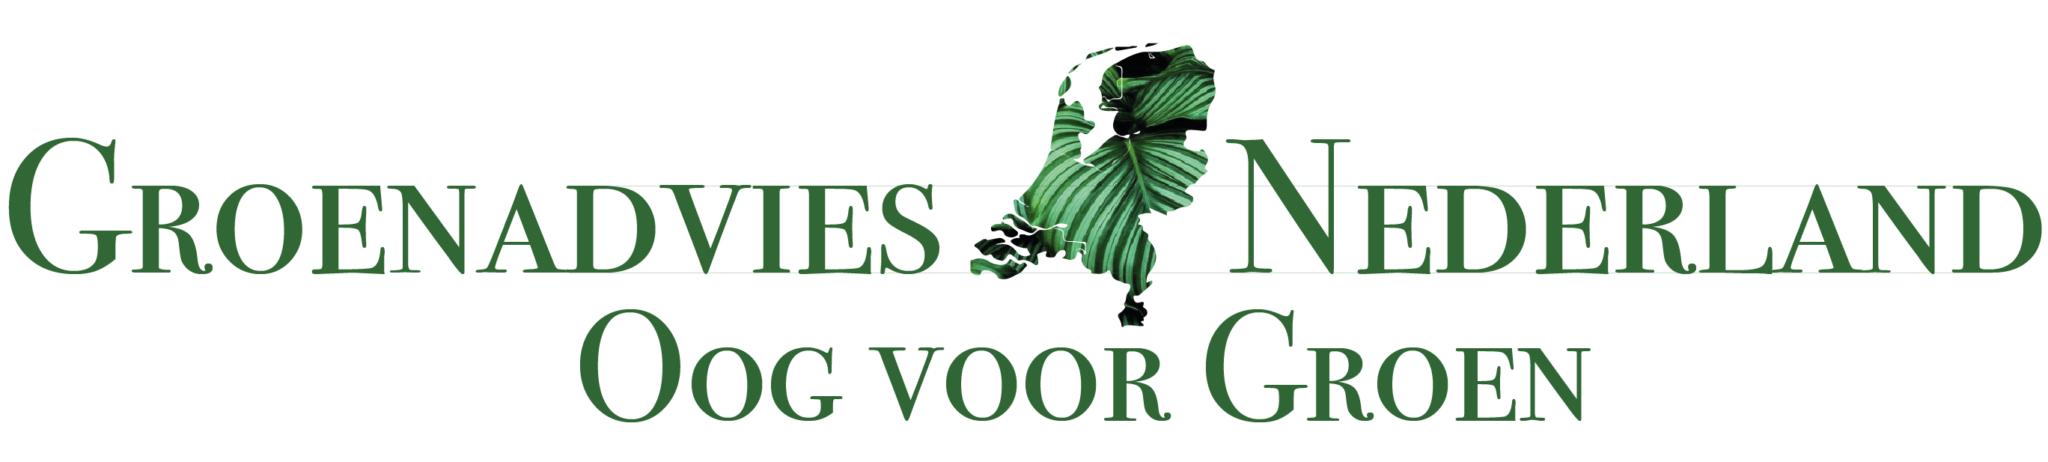 Groenadvies Nederland